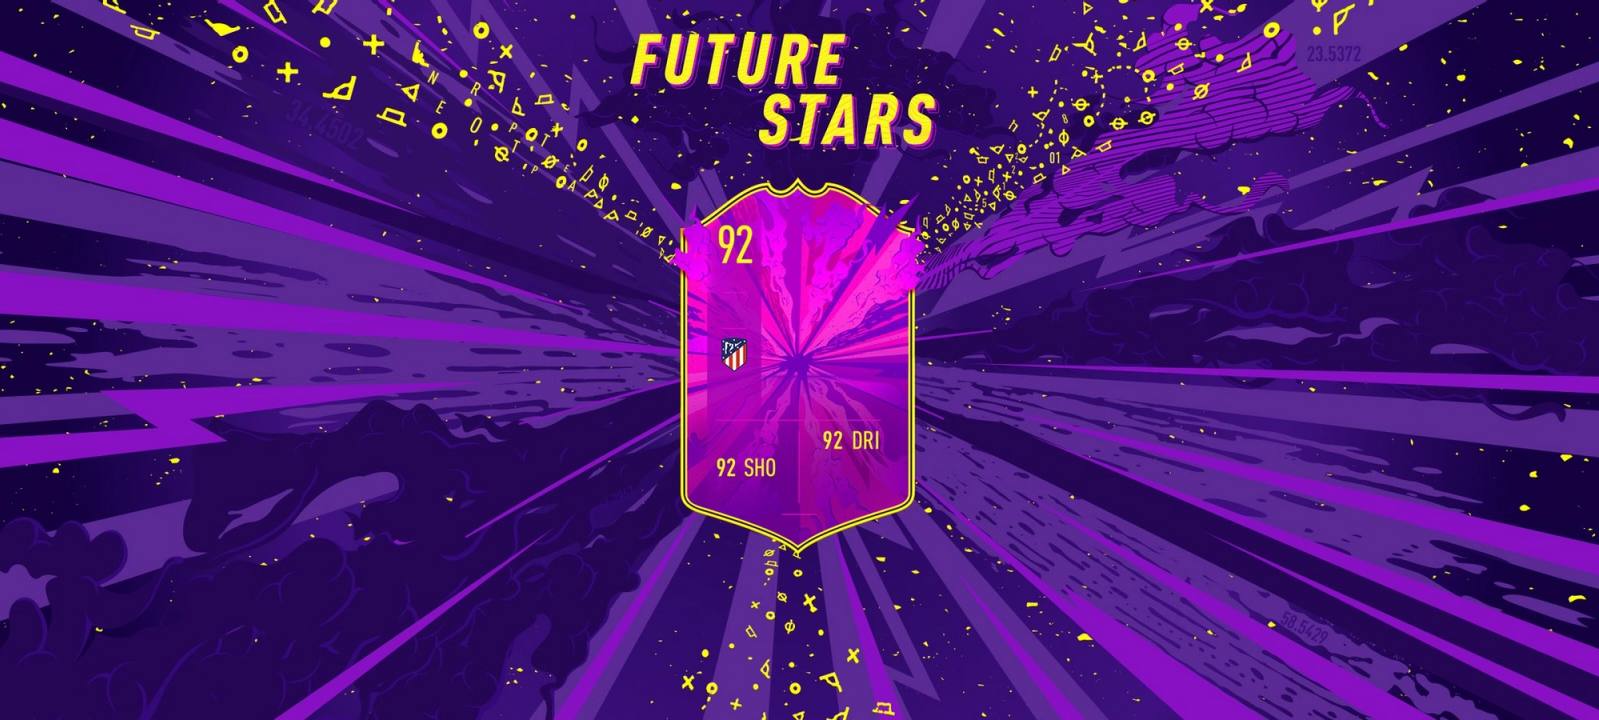 fifa 20 future stars Joao Felix card